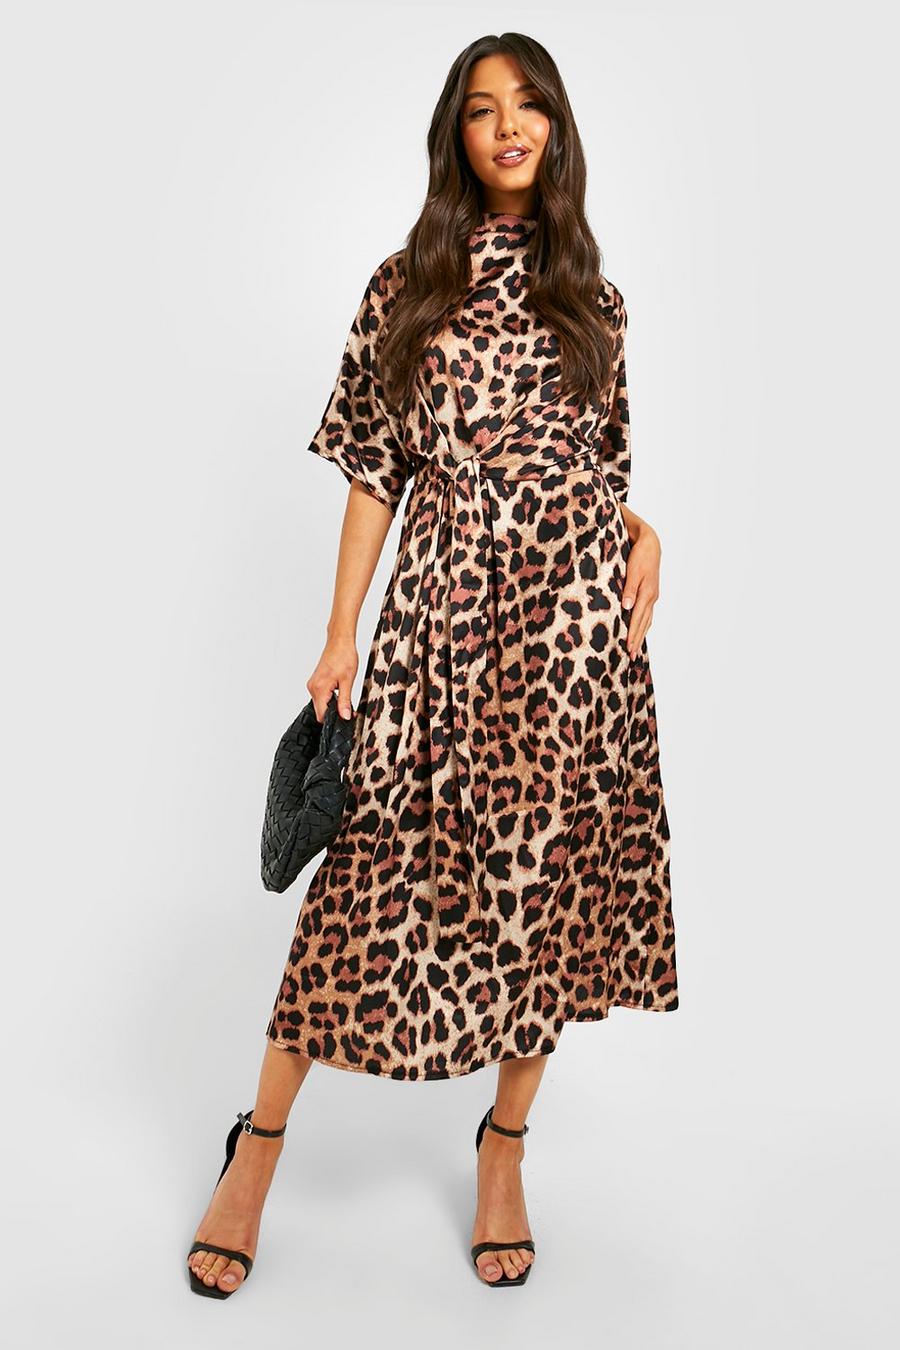 Black Satin Leopard Knot Front Cowl Neck Midi Dress